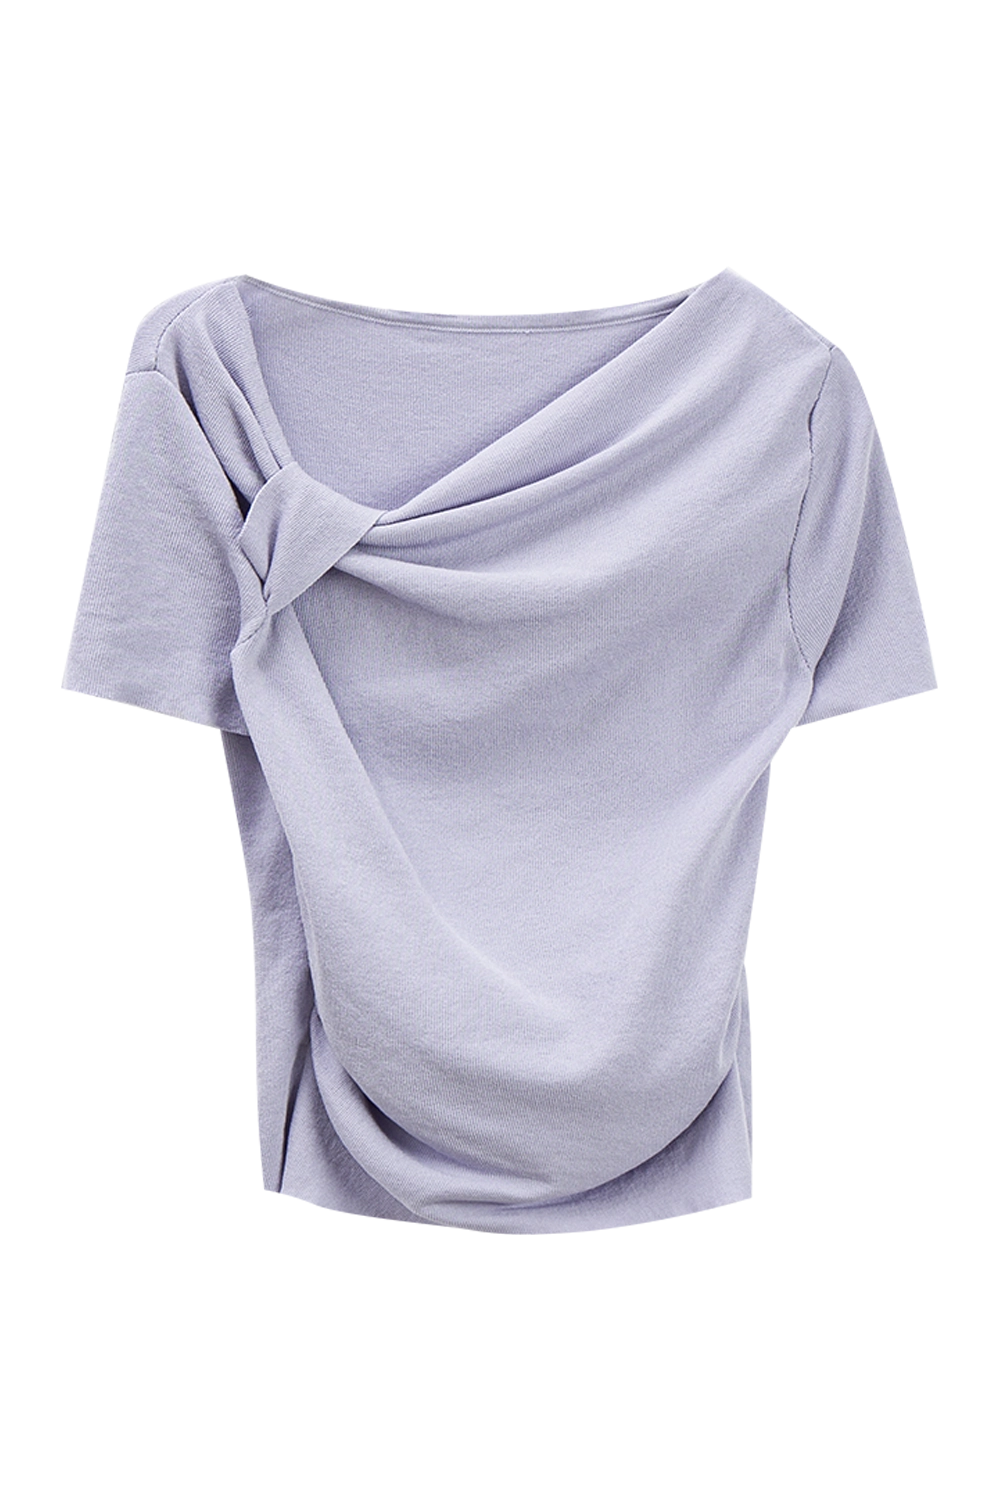 Women's Simple Knot Front Short-Sleeve T-Shirt